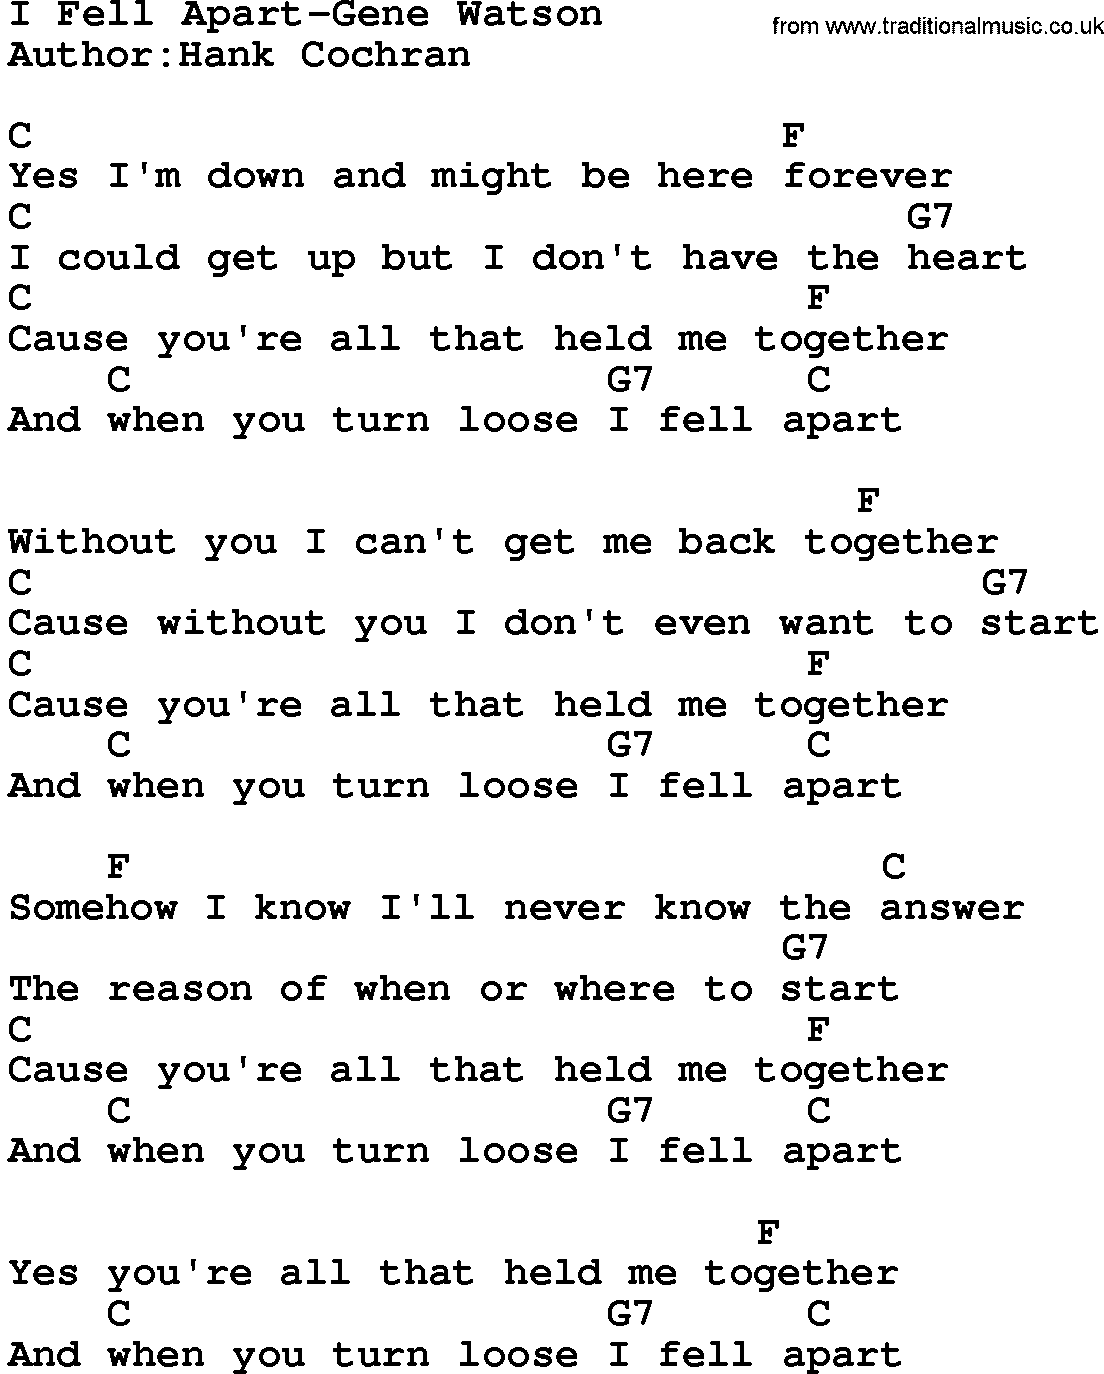 Country music song: I Fell Apart-Gene Watson lyrics and chords